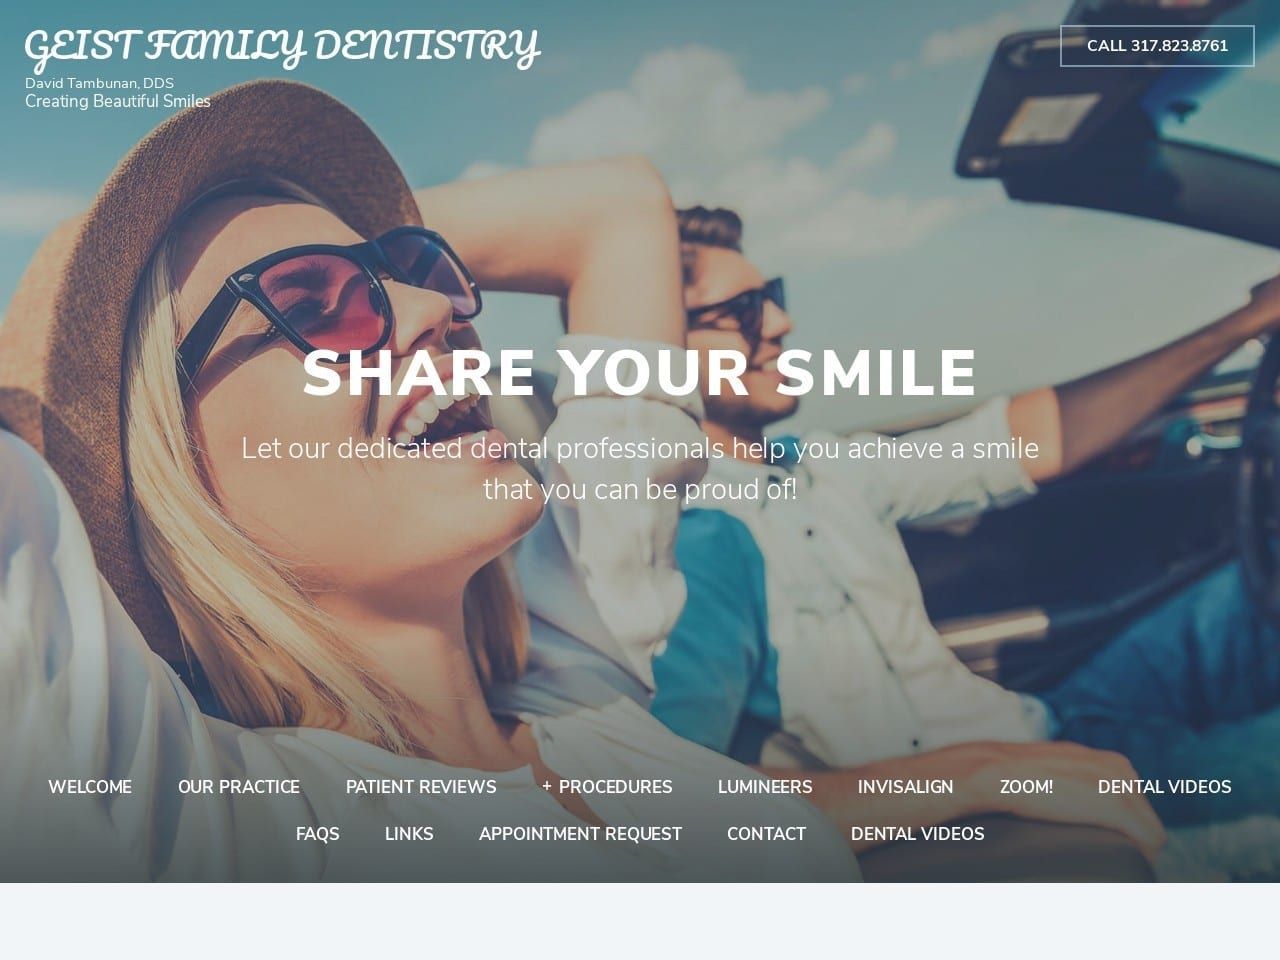 Geist Family Dentist Website Screenshot from geistfamilydentistry.com